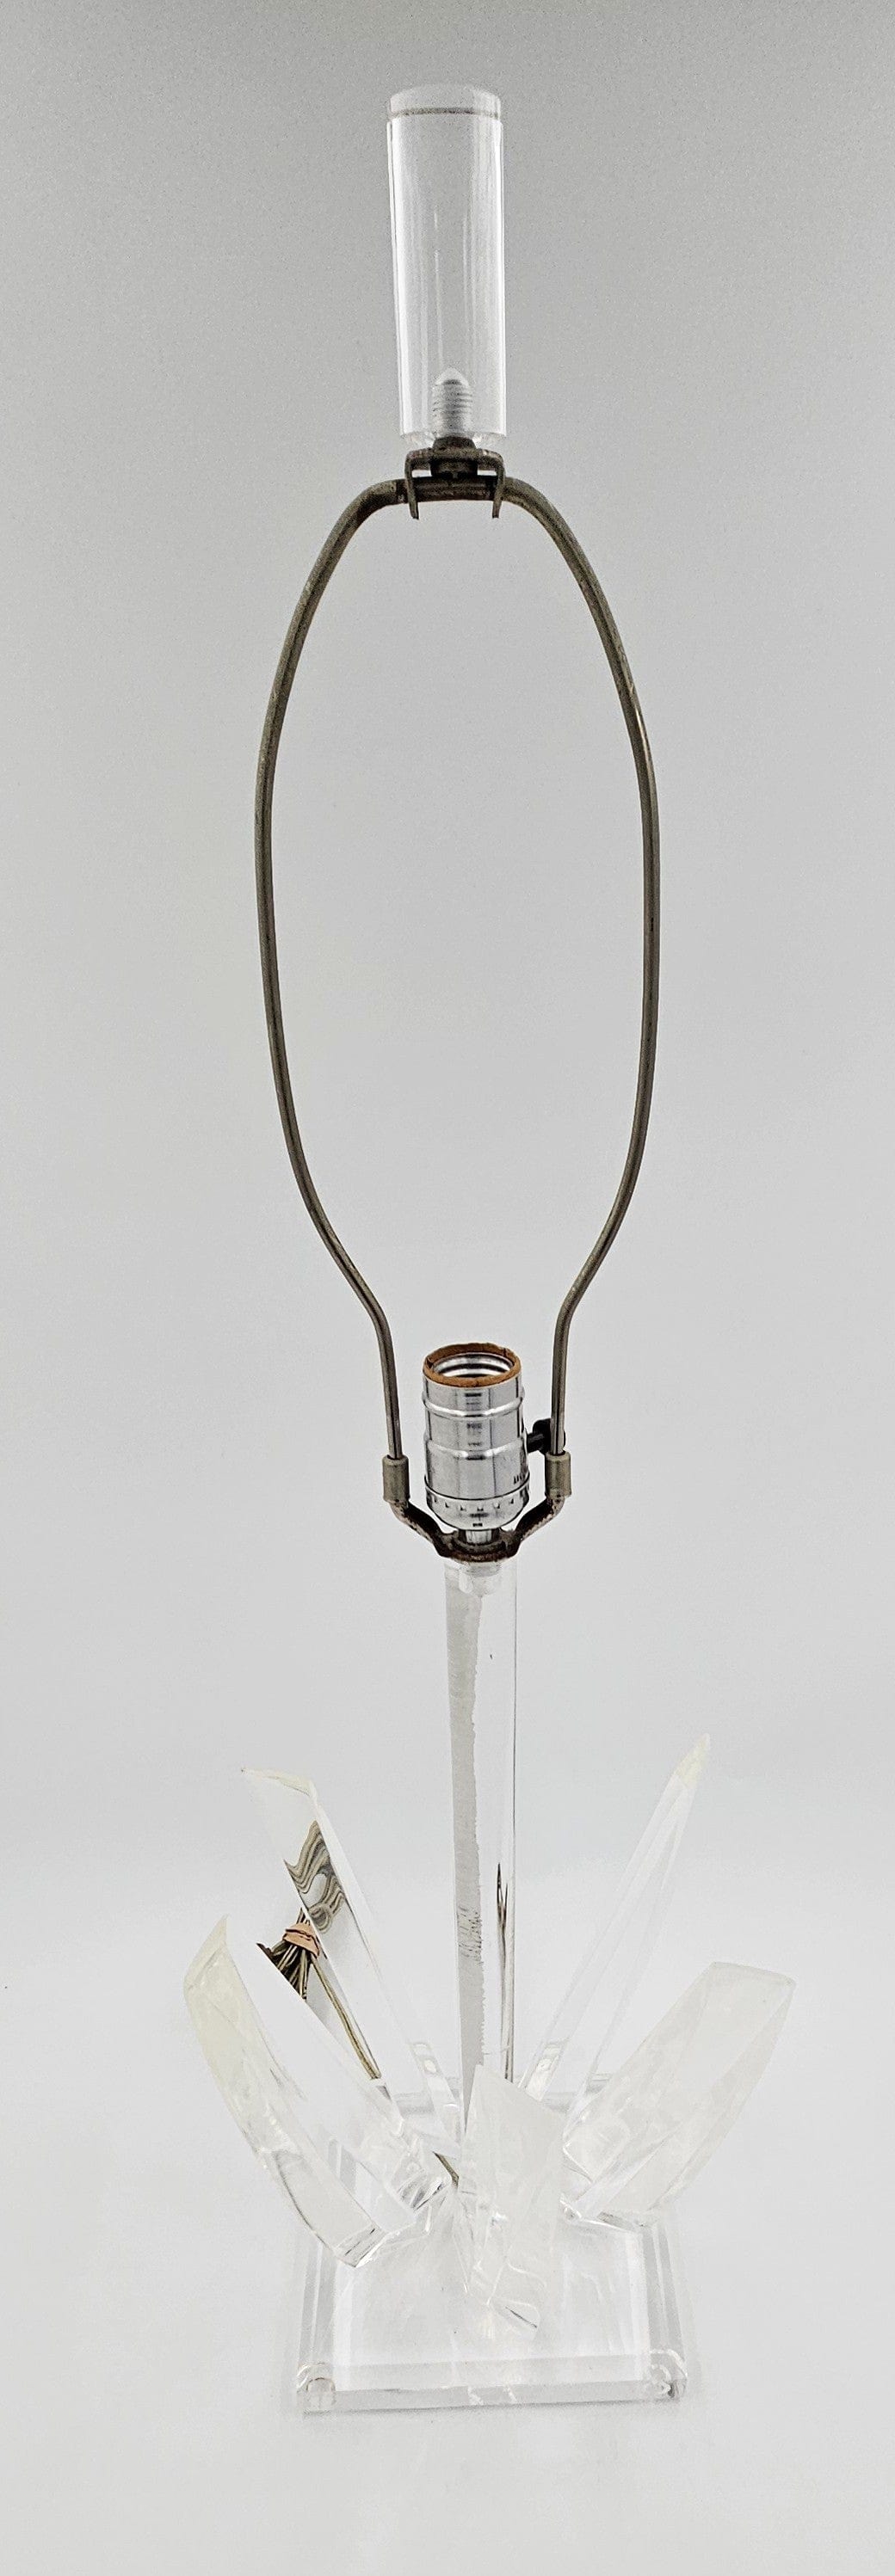 Van Teal Lamp Superb Van Teal Lucite Abstract Modernist Table Lamp Circa 1970/80's